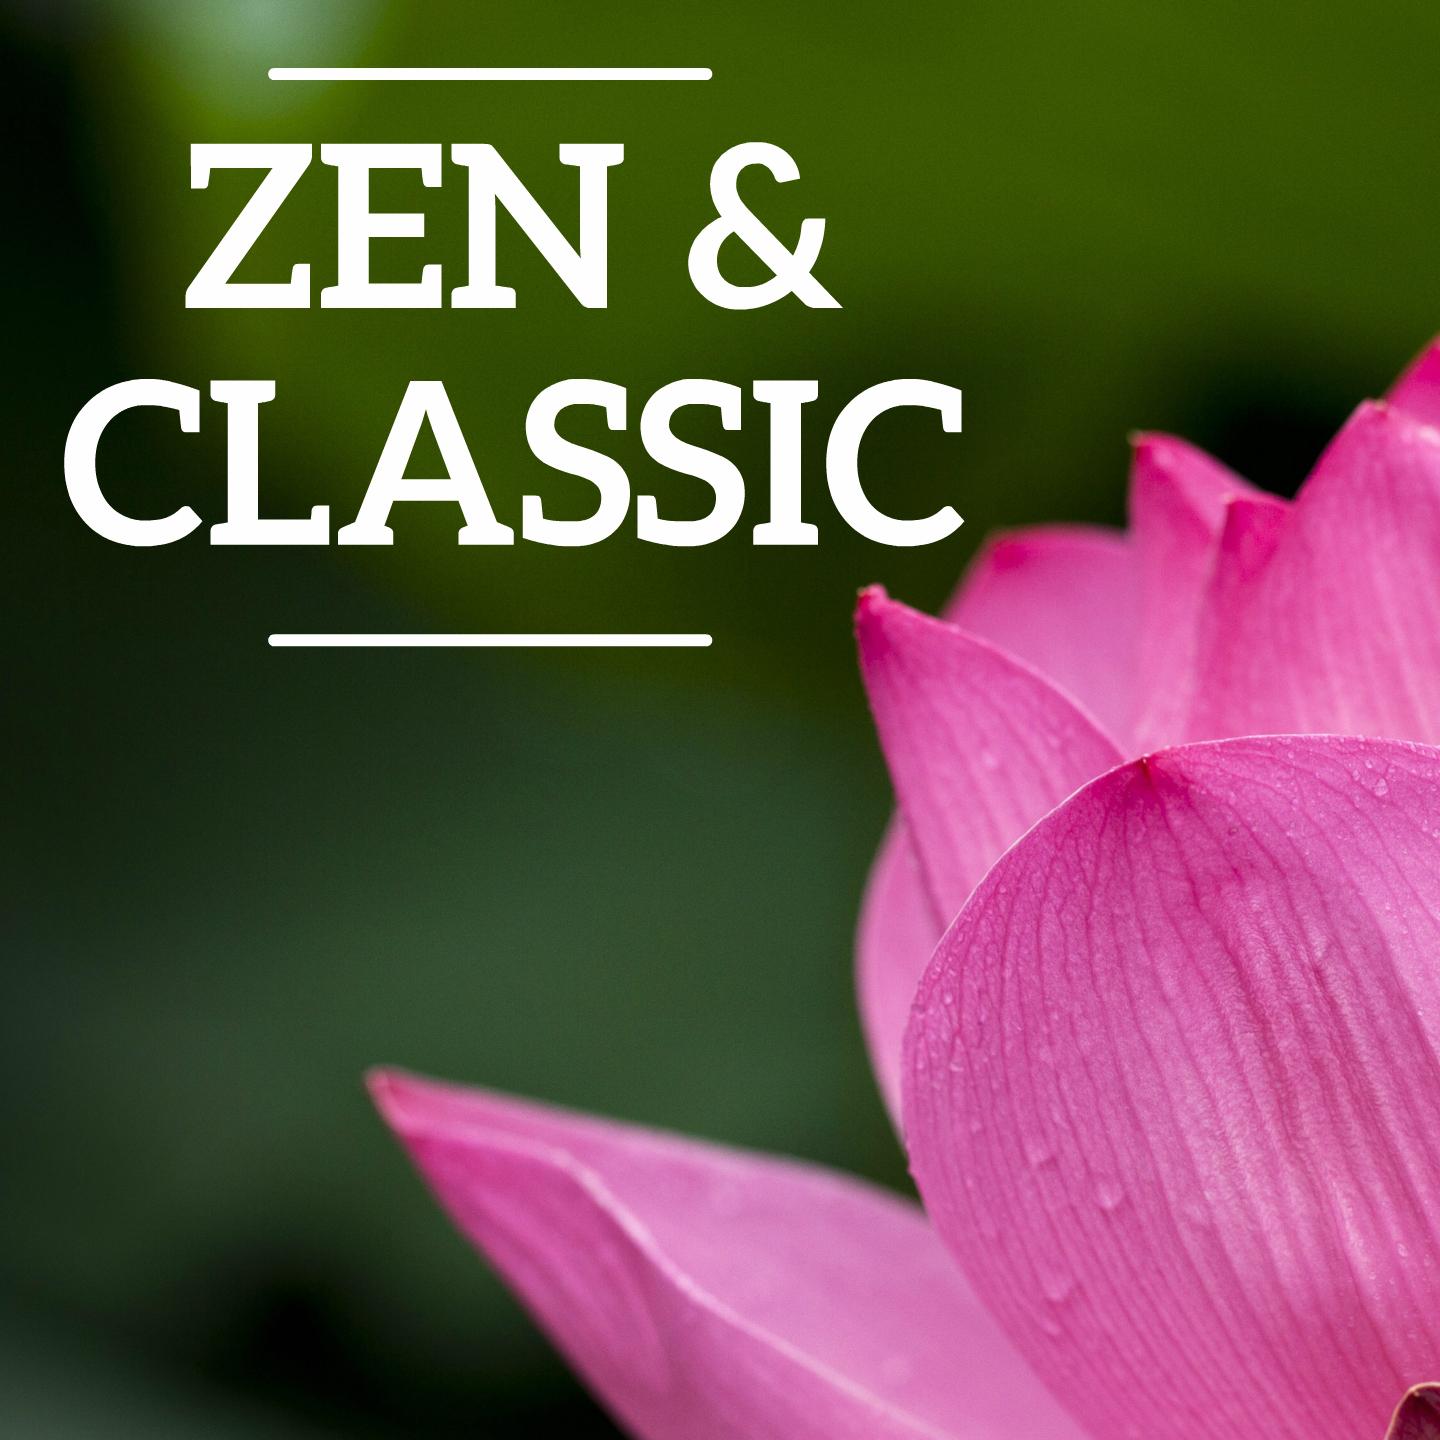 Zen & Classic